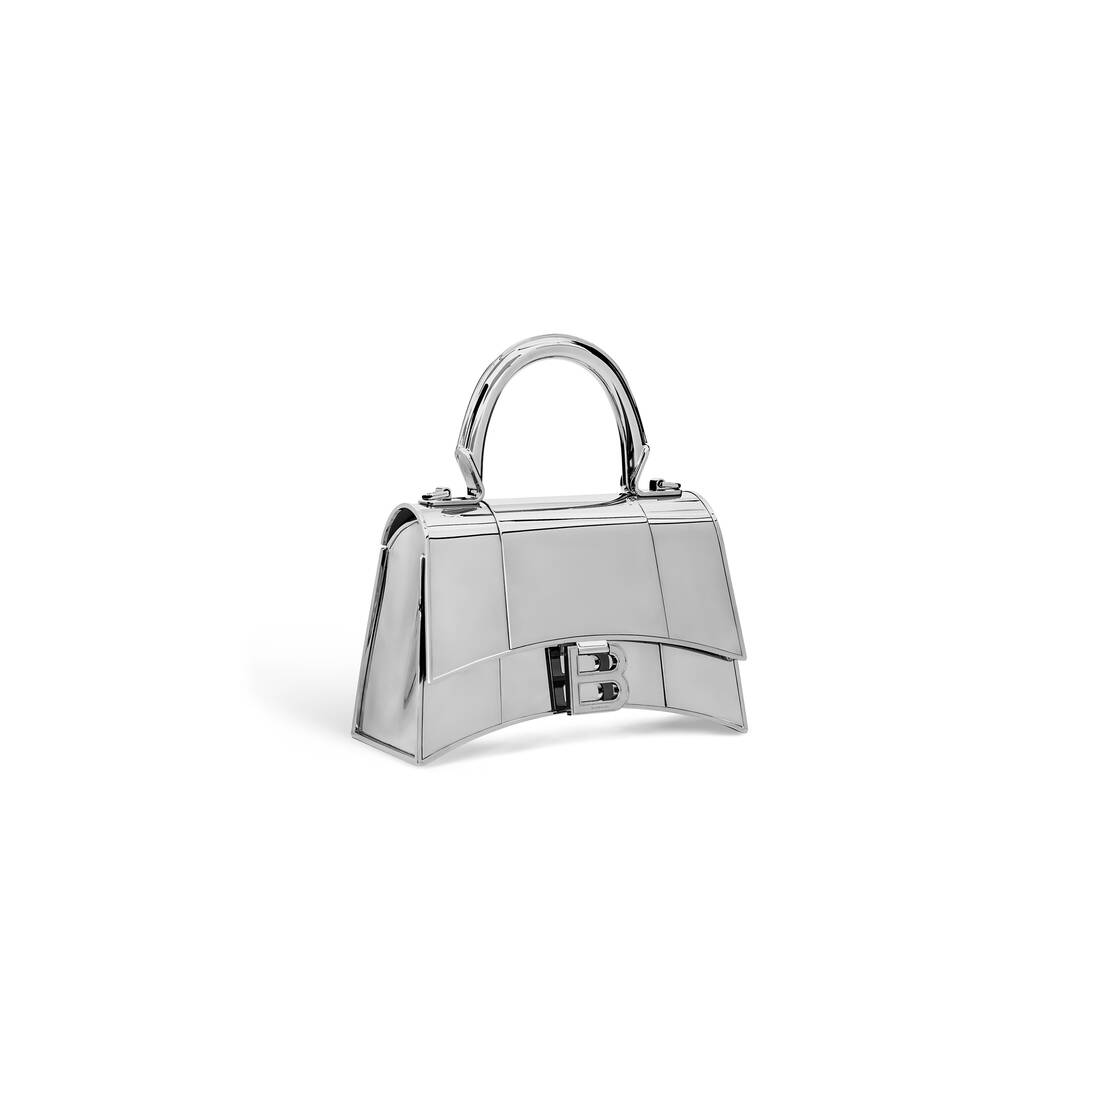 Balenciaga Hourglass S Bag in Silver Leather Silvery Metallic ref